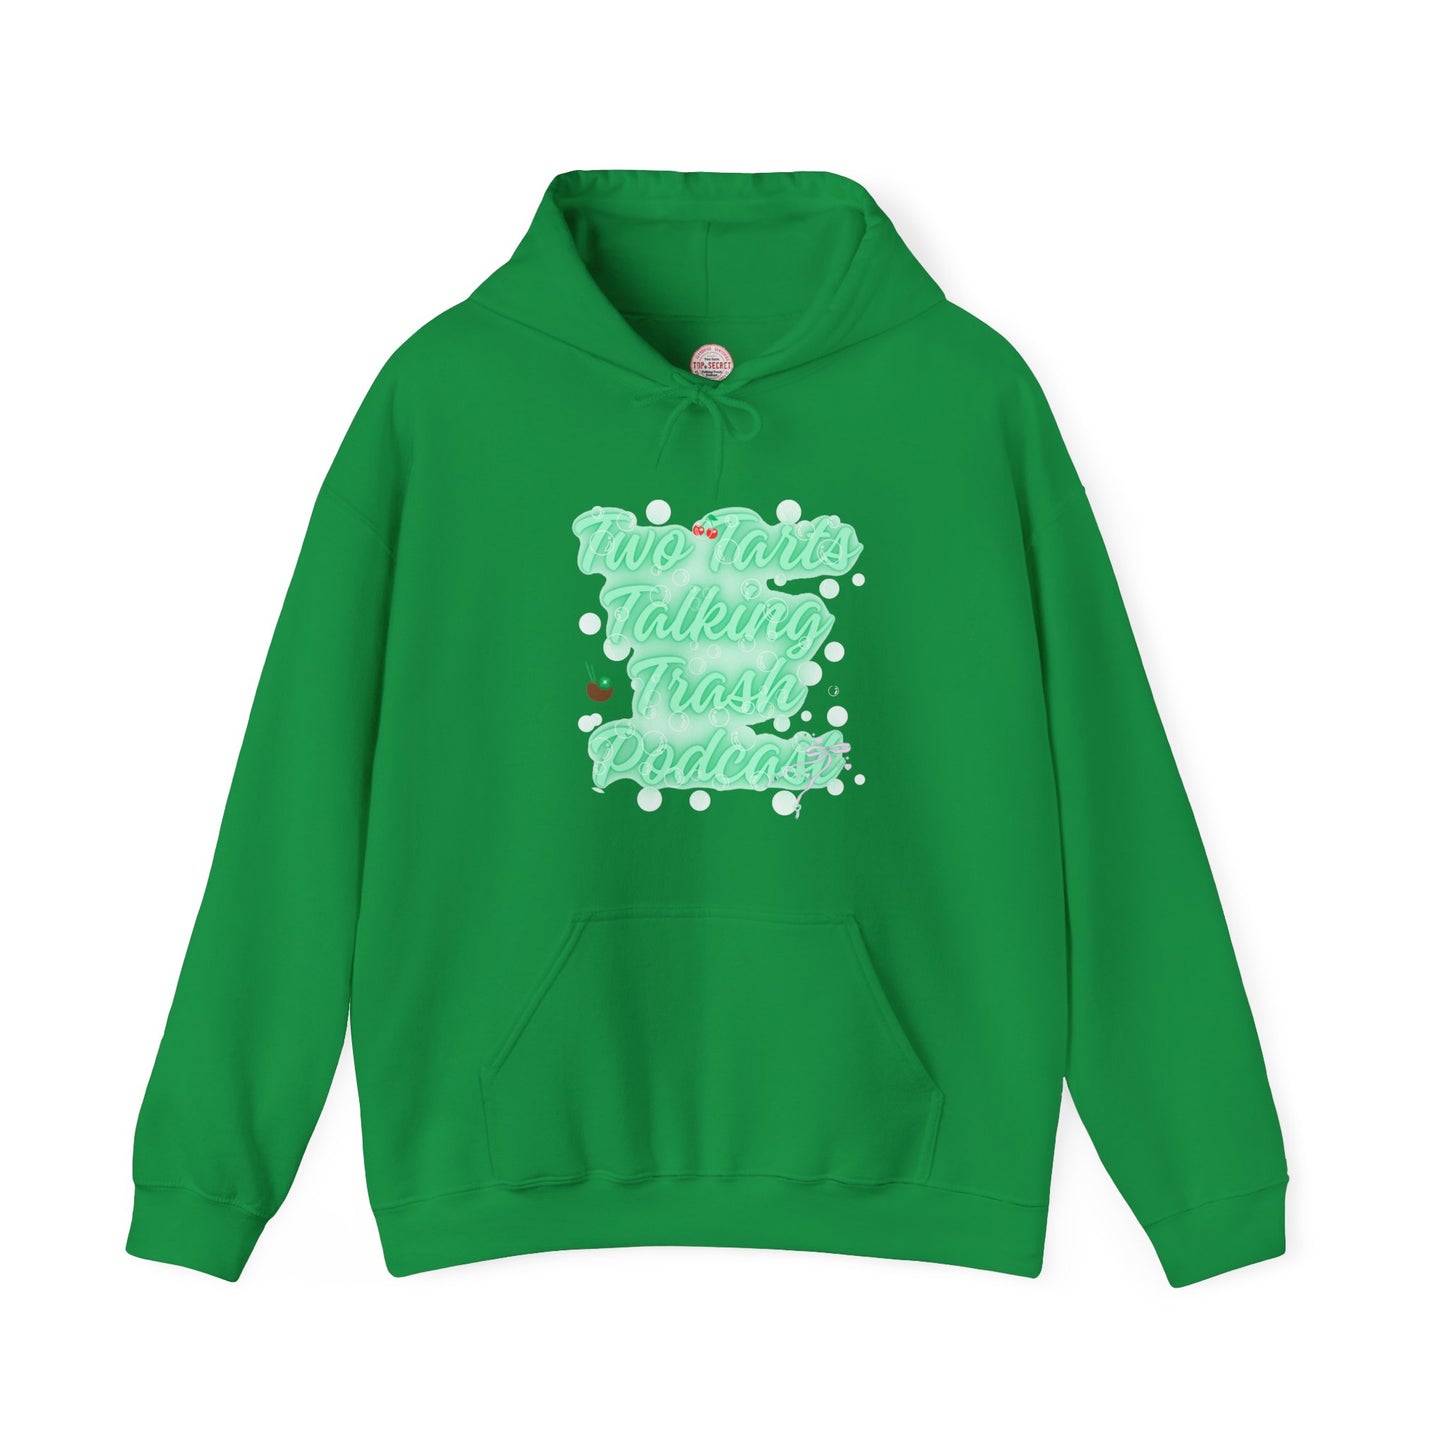 Two Tarts Talking Trash Podcast Green Bubble Unisex Heavy Blend™ Hooded Sweatshirt